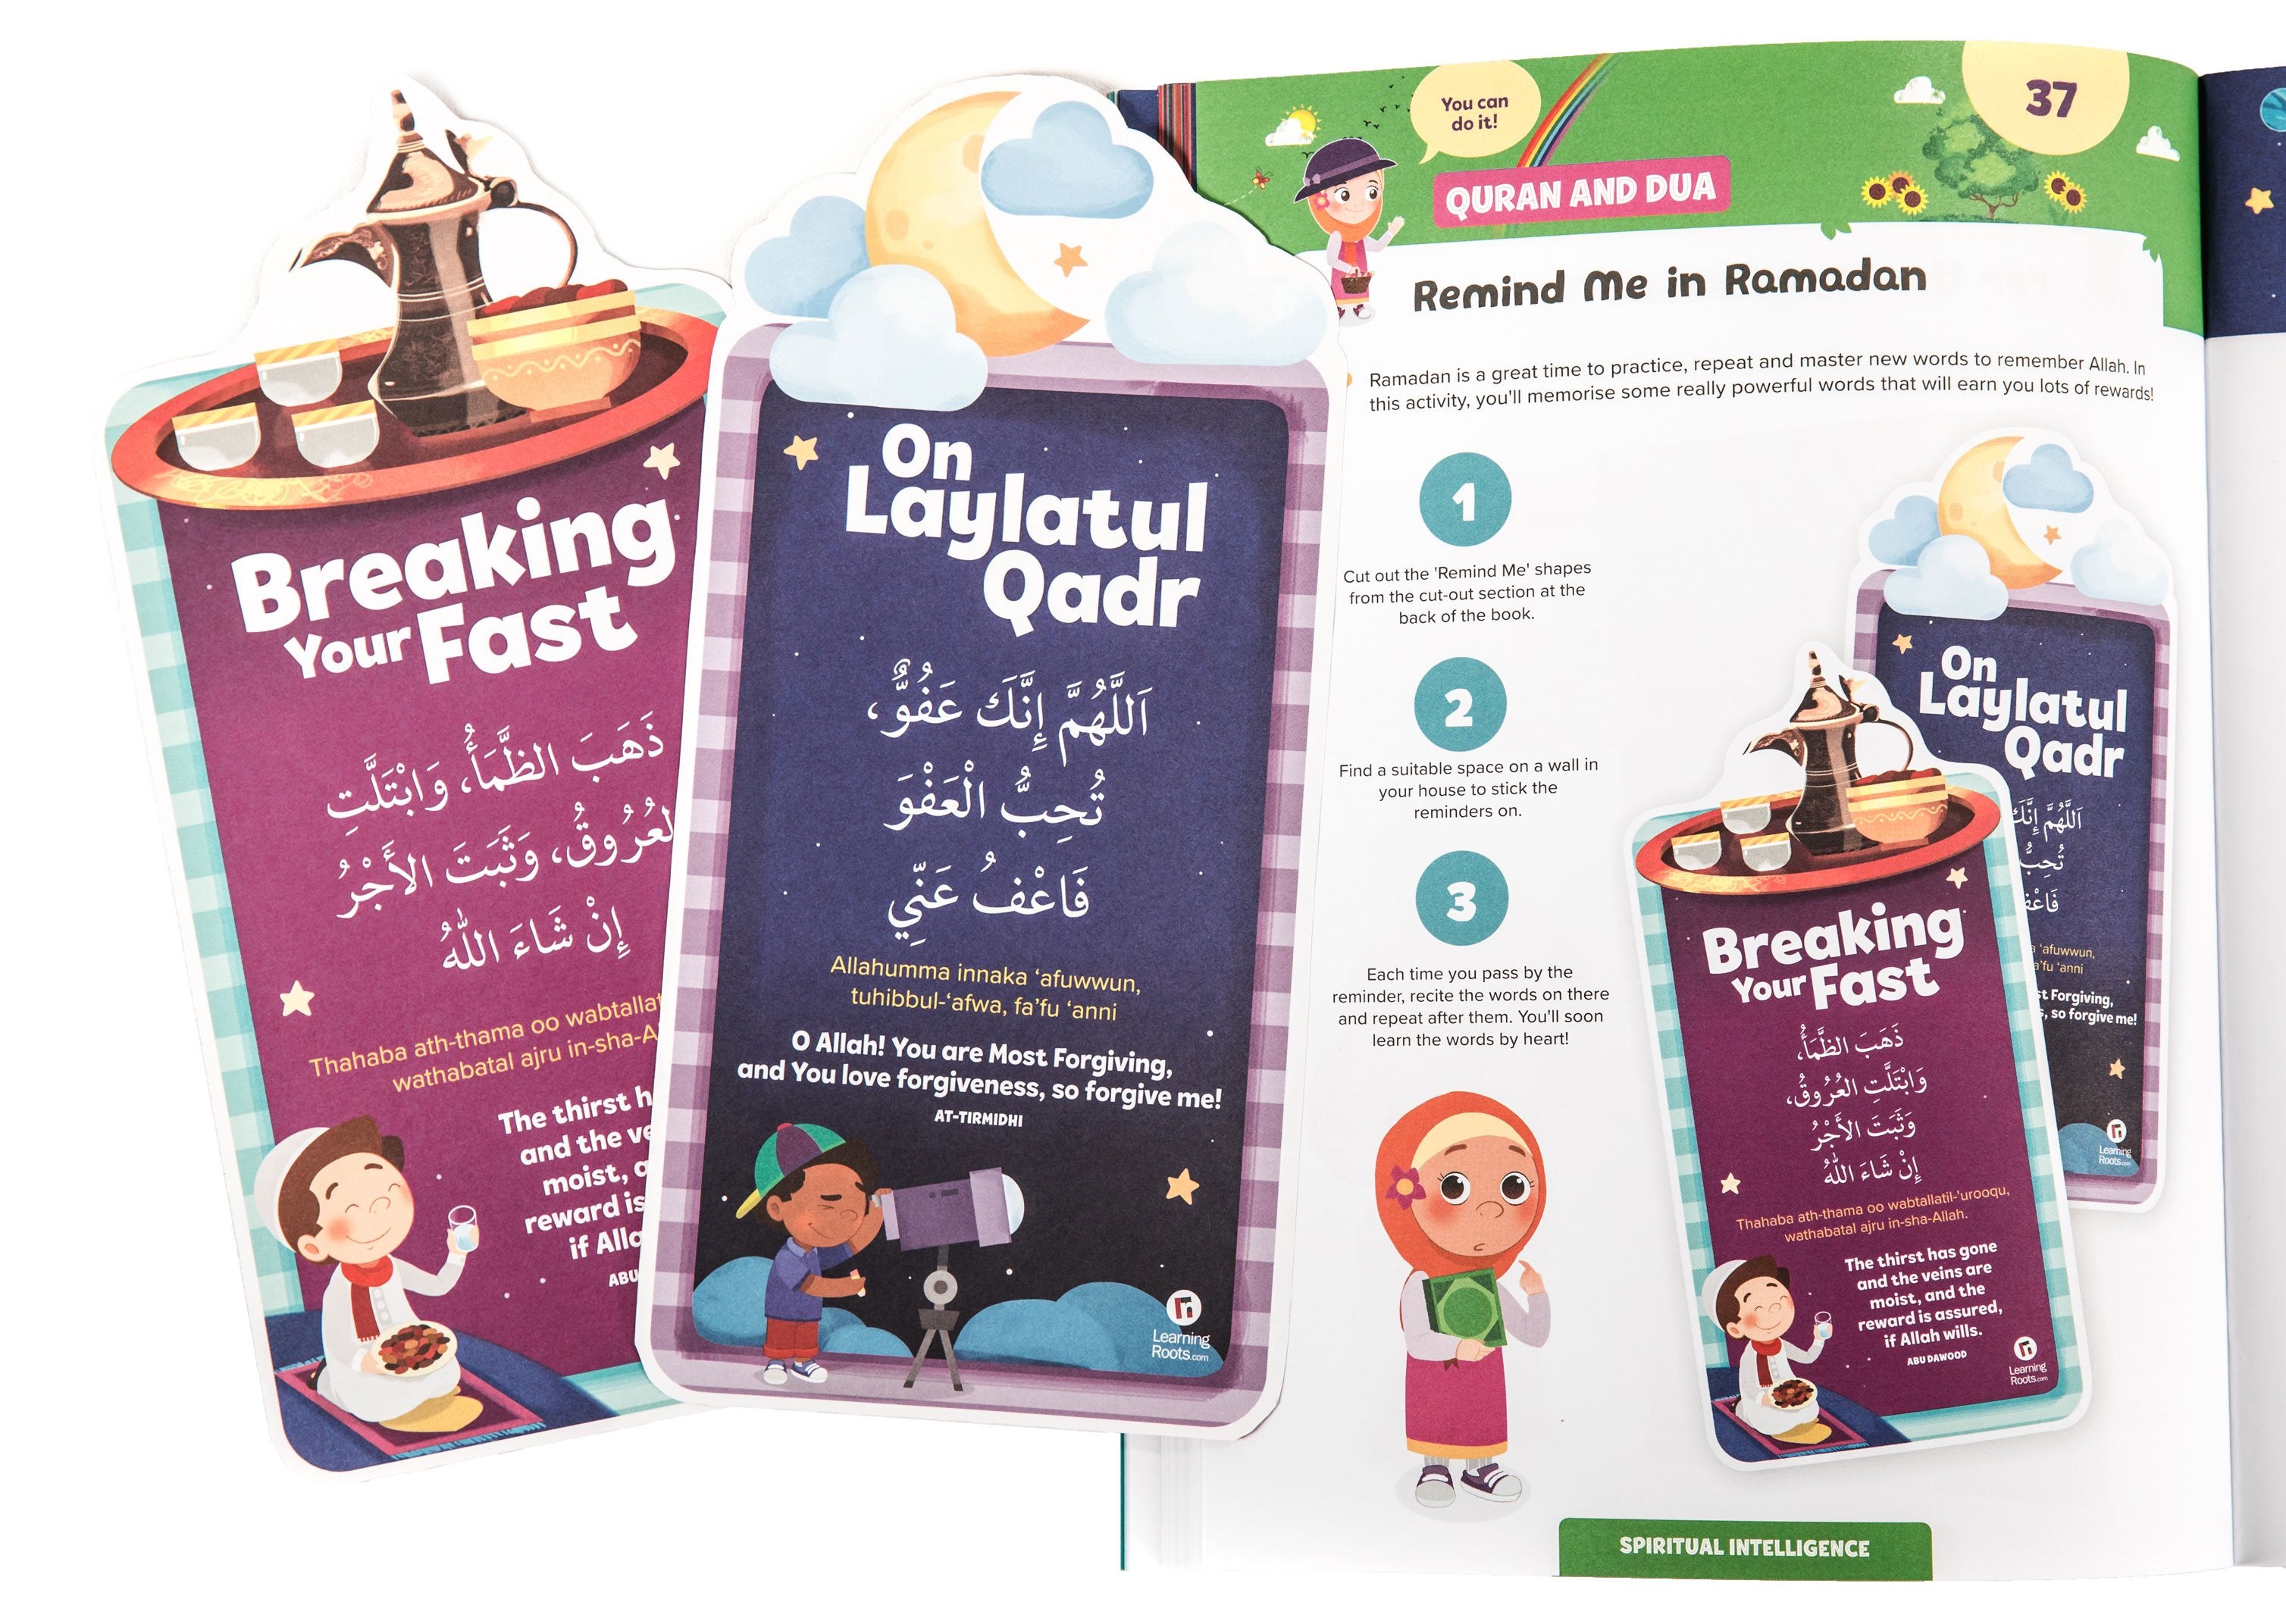 Ramadan Activity Book Set (Big & Little Kids)